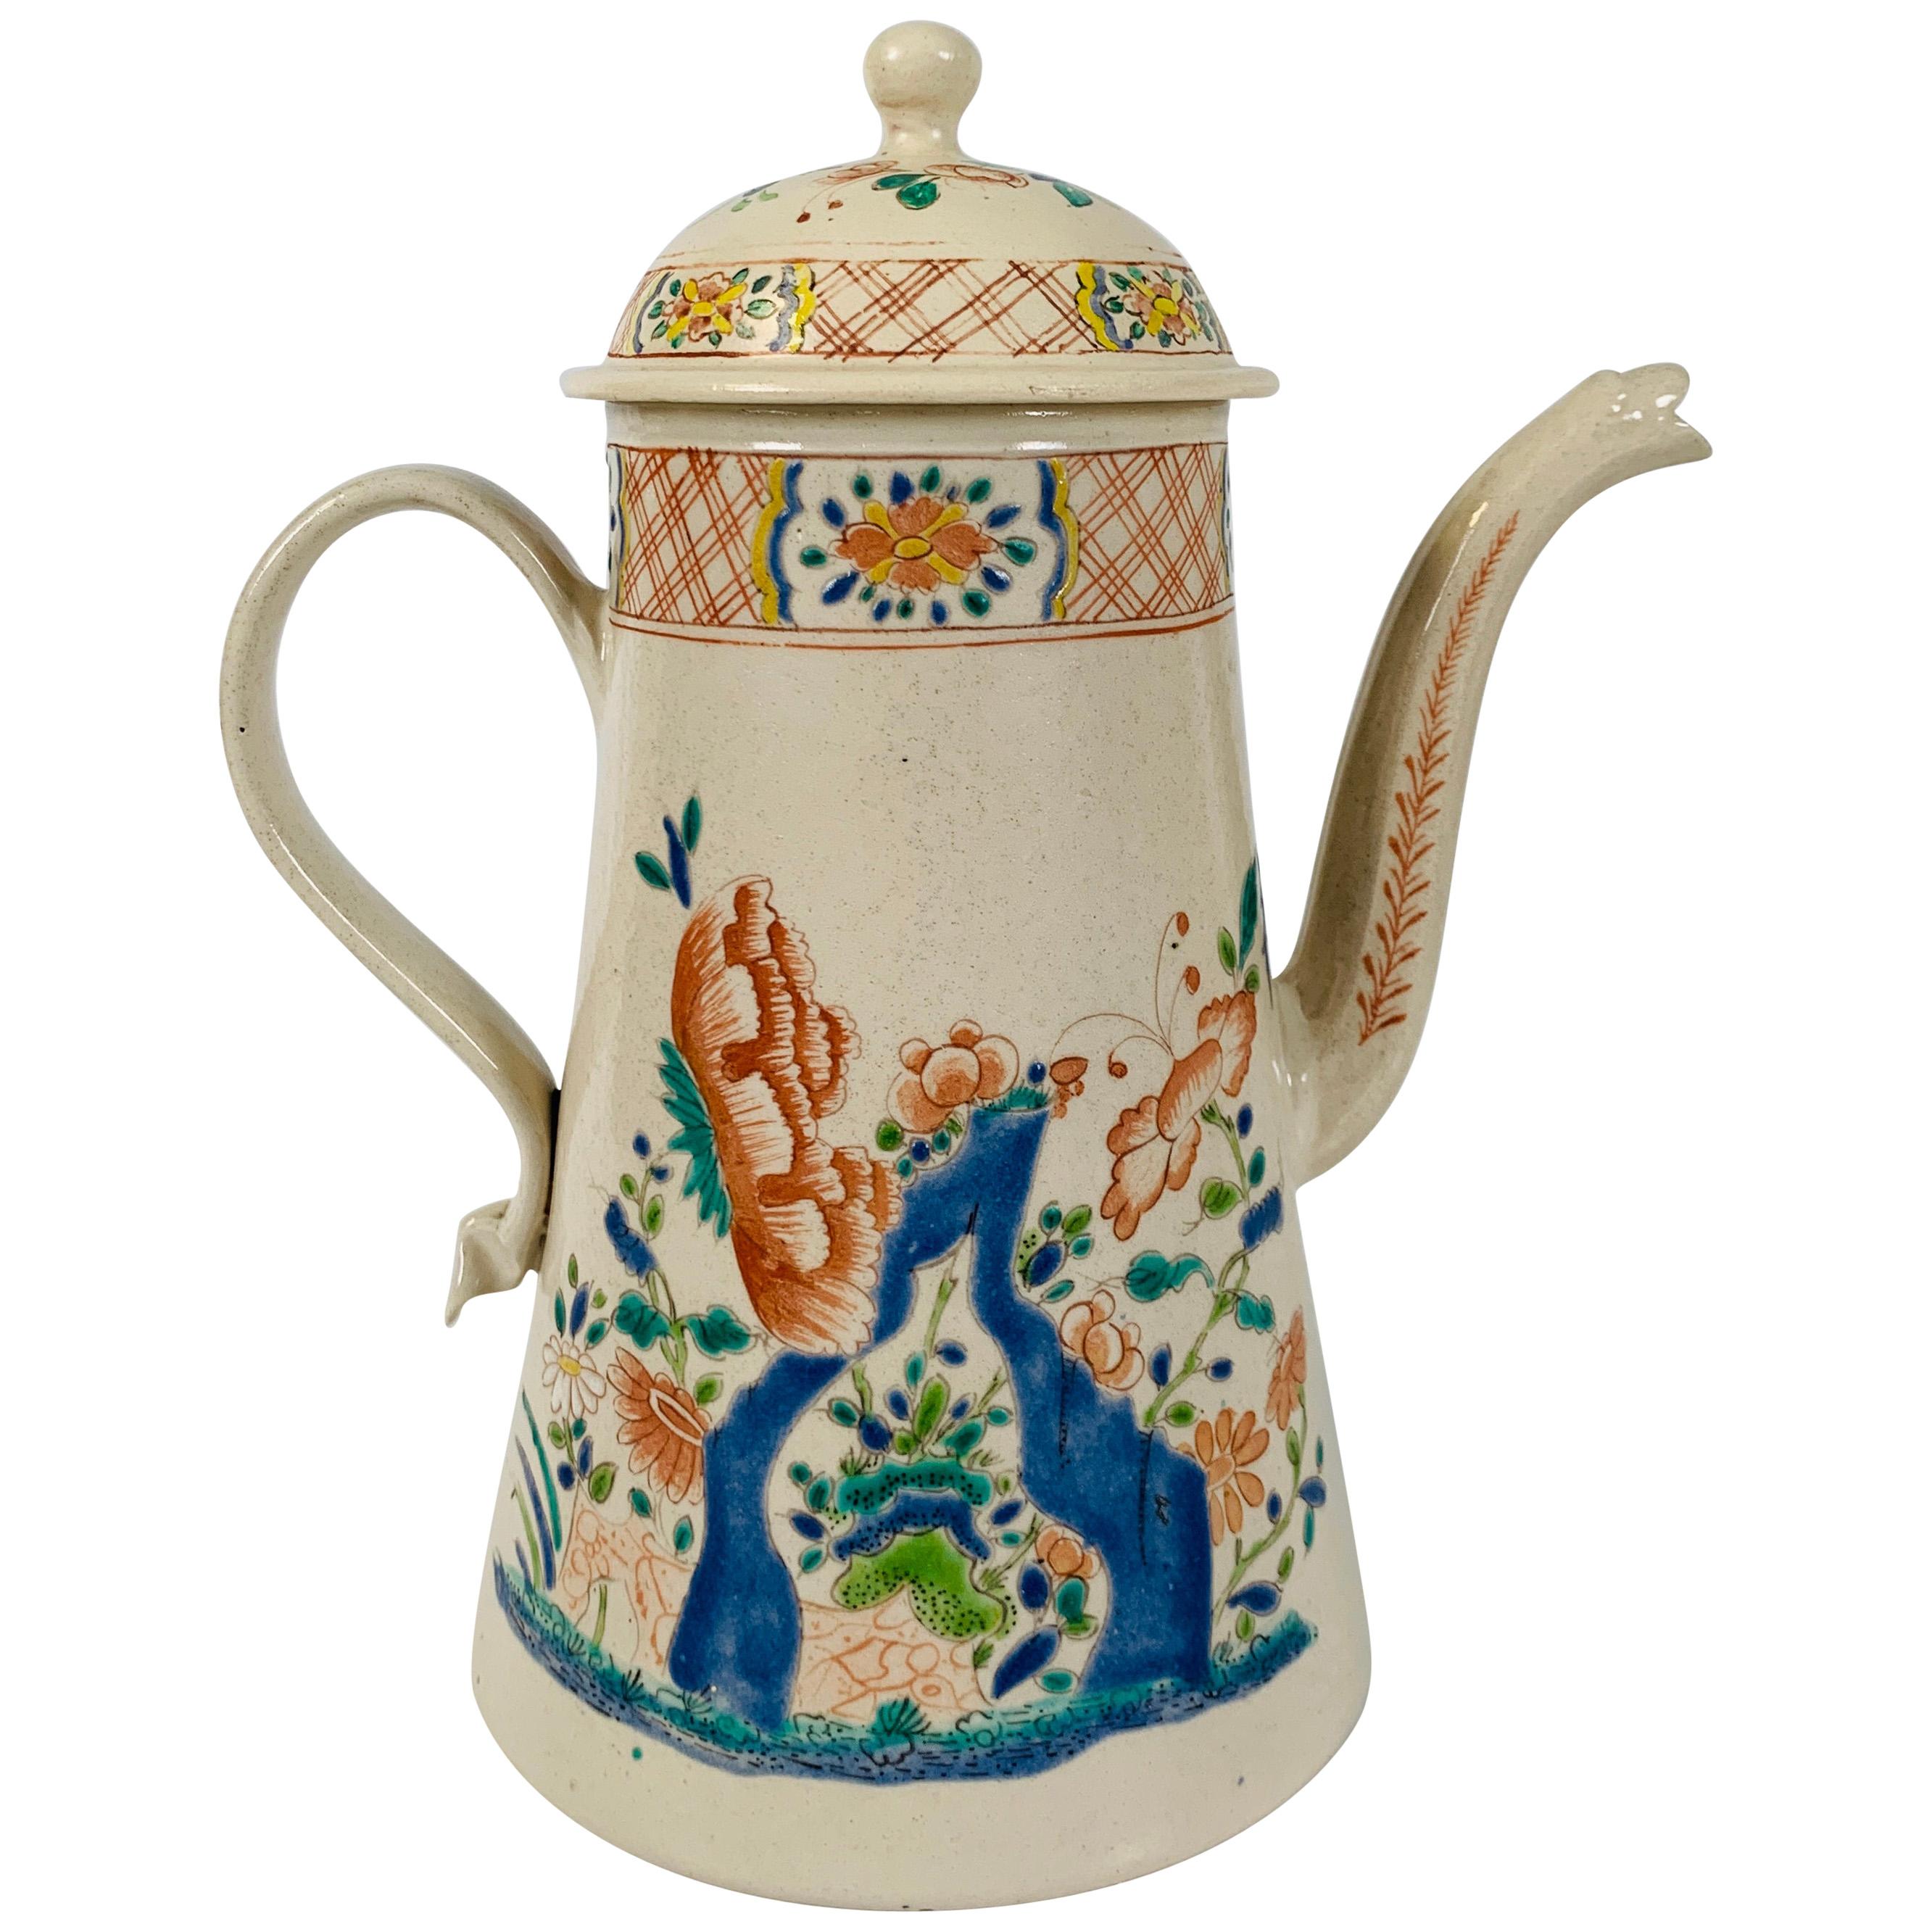 Salt-Glazed Coffee Pot Mid-18th Century England with Chinoiserie Design